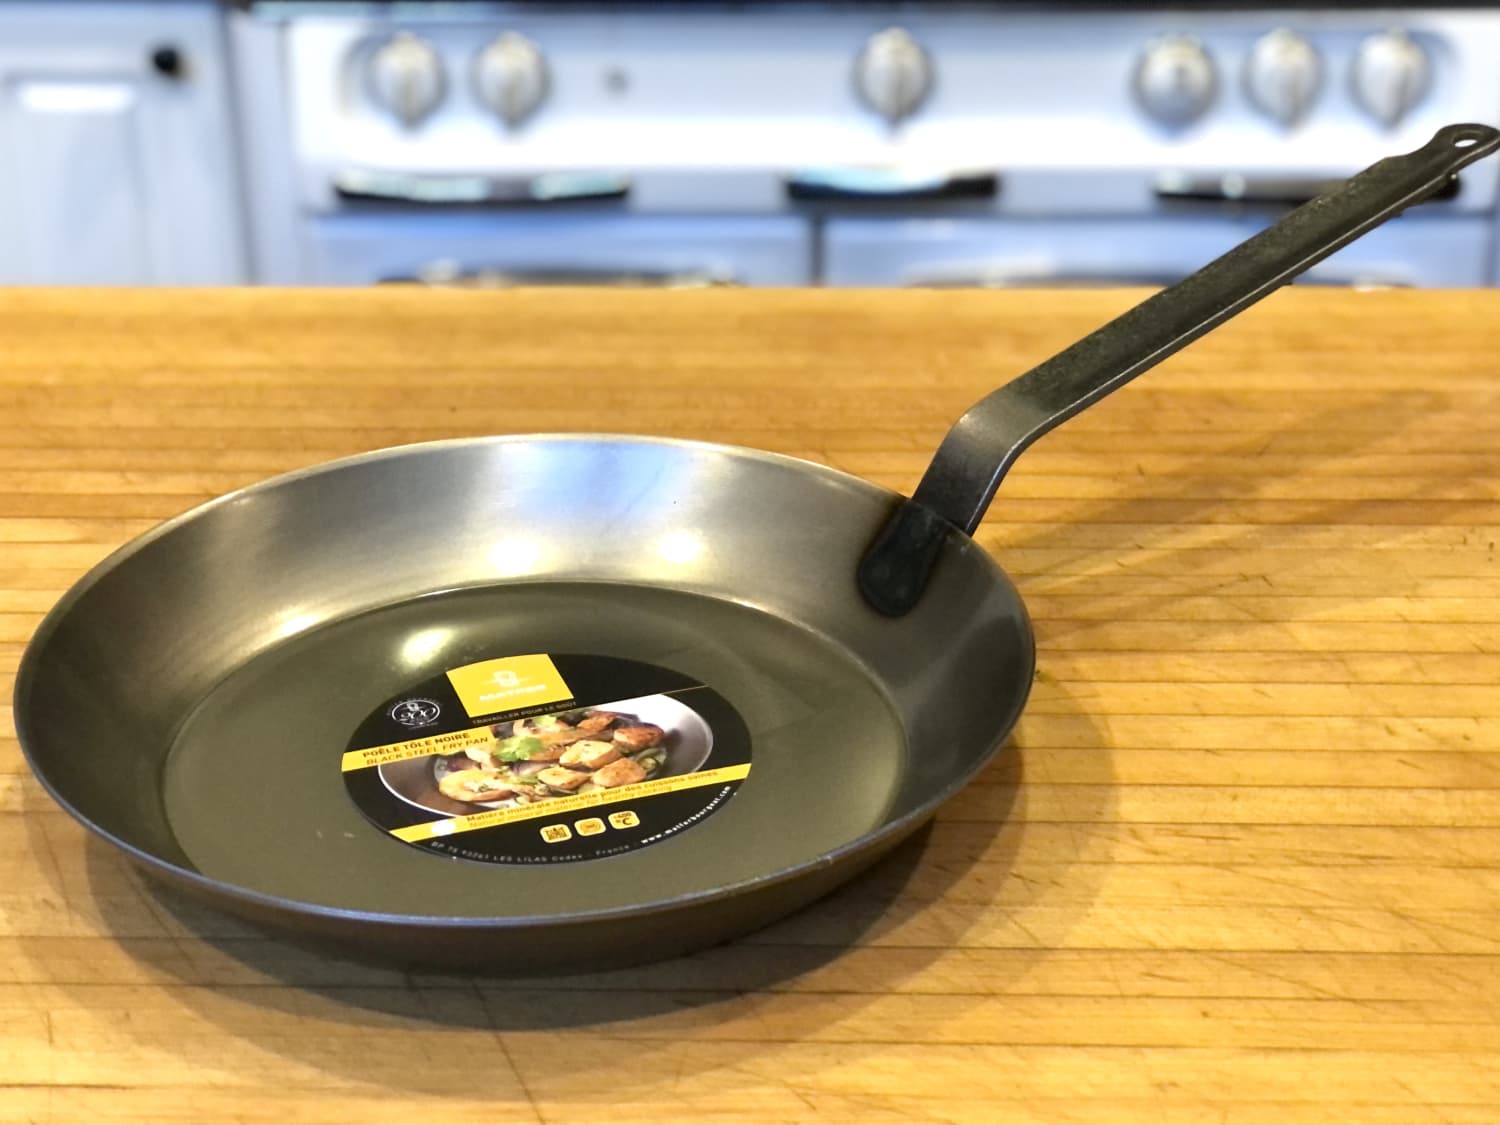 Matfer Bourgeat Carbon Steel Fry Pan Review: A Versatile Pan